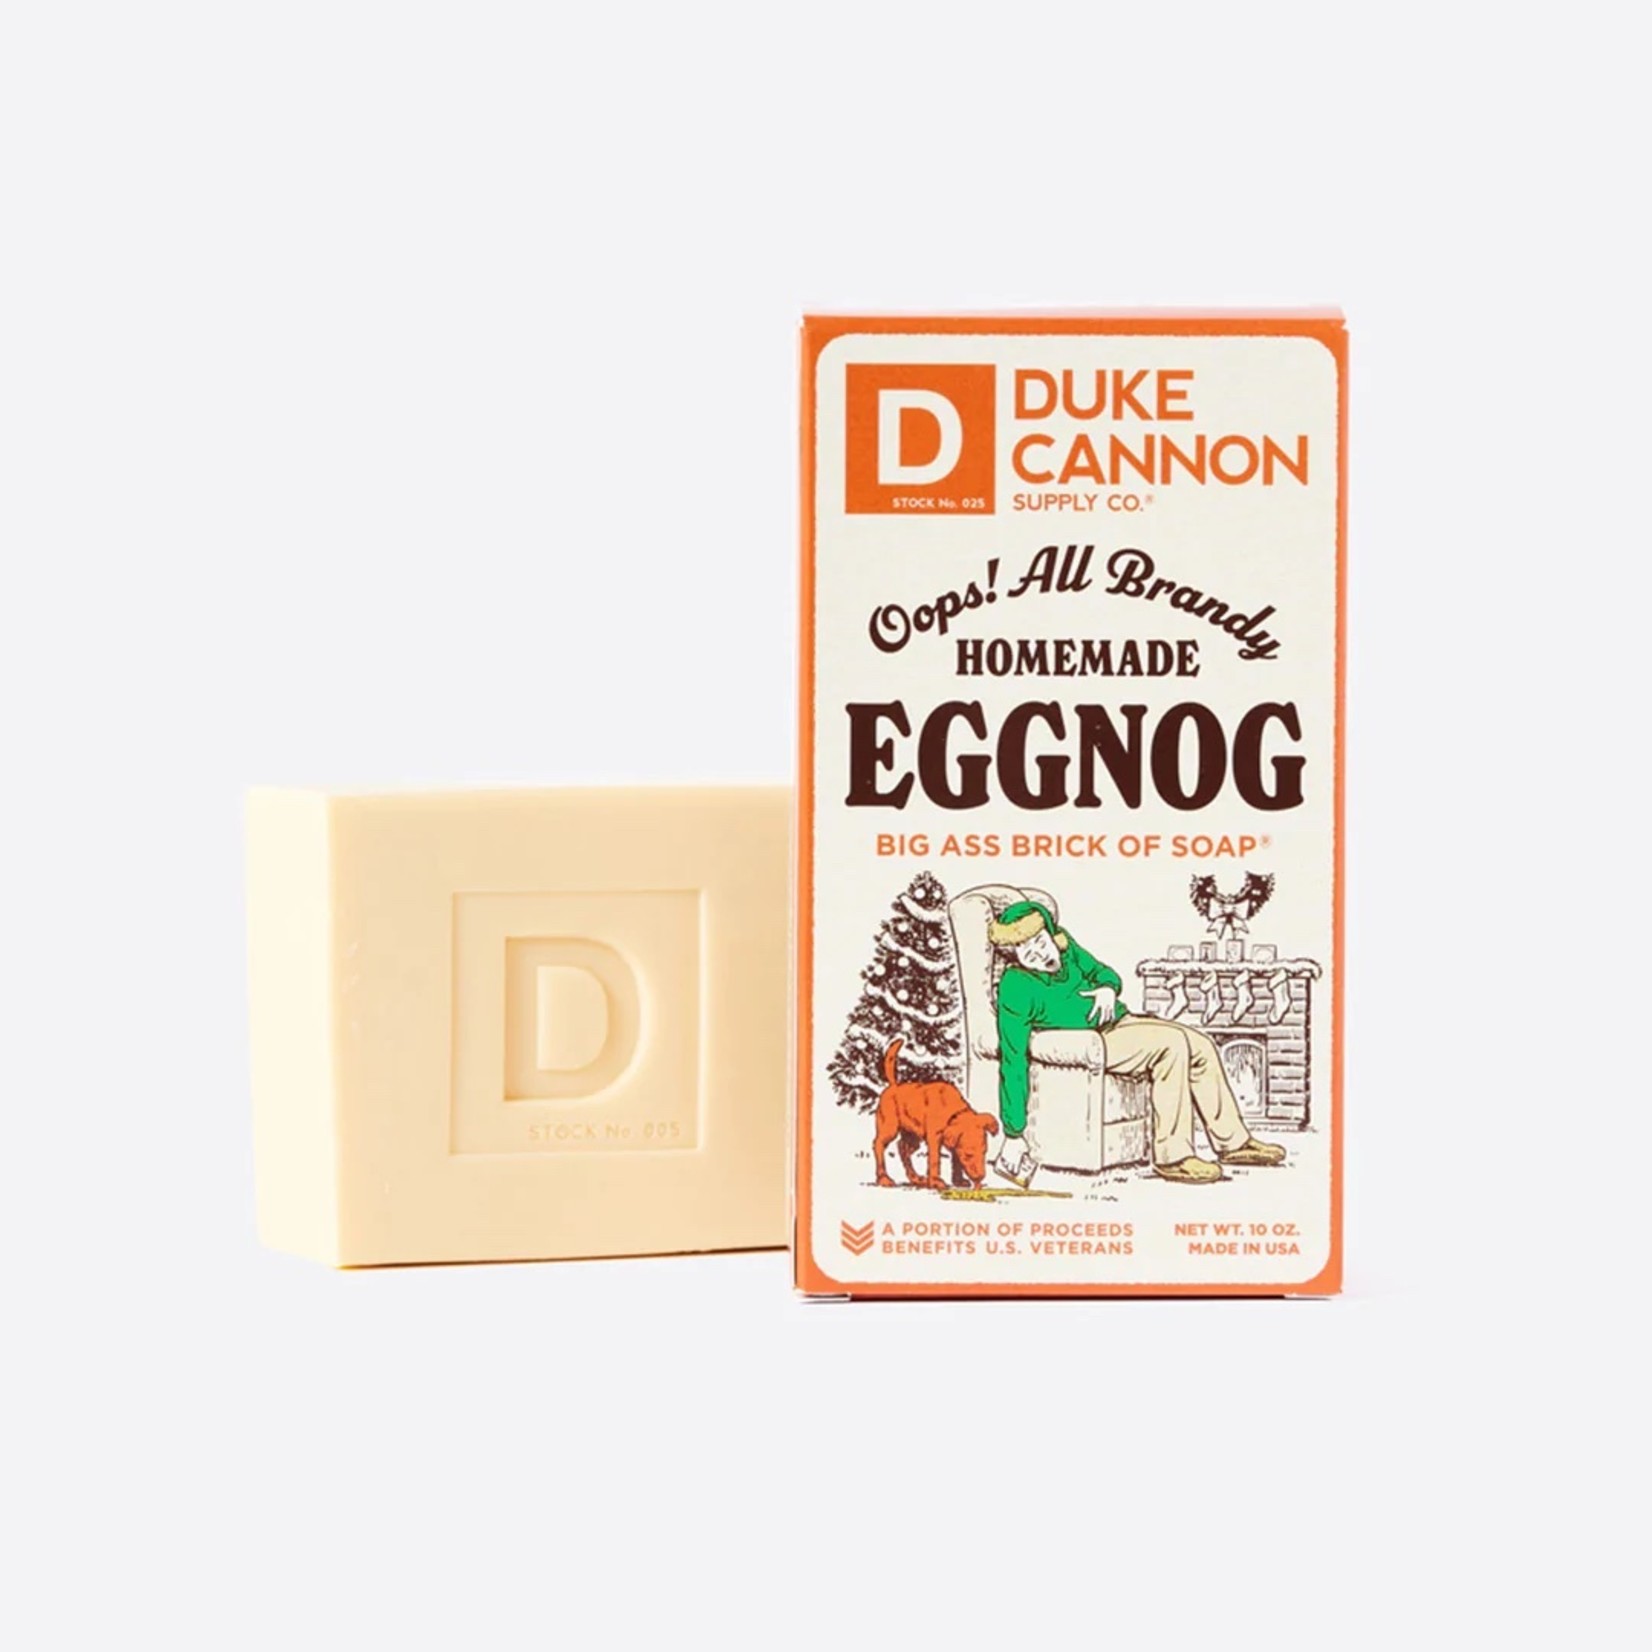 Duke Cannon Duke Cannon Oops! All Brandy Homemade Eggnog Soap